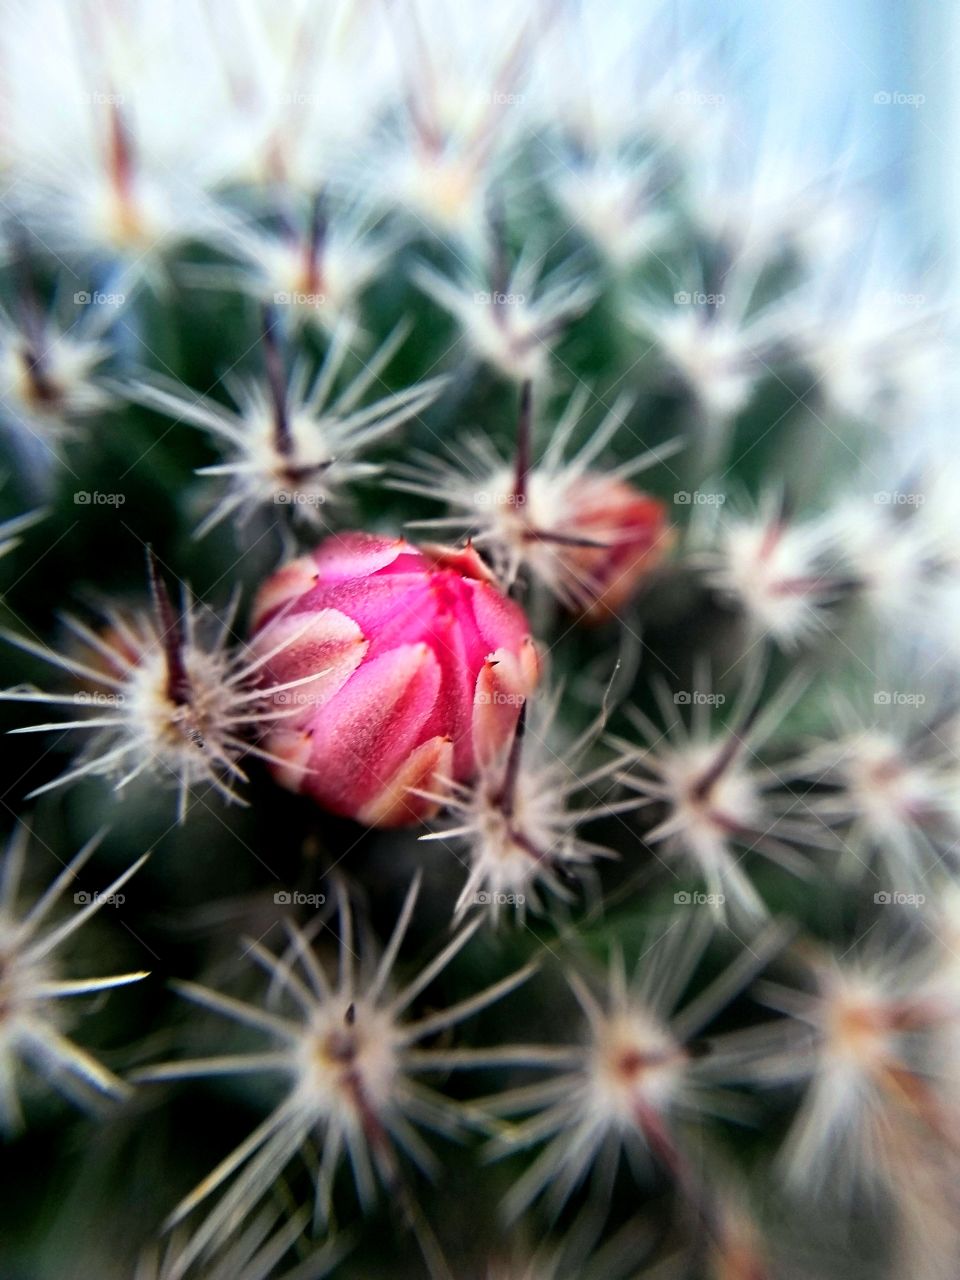 A Cactus Life